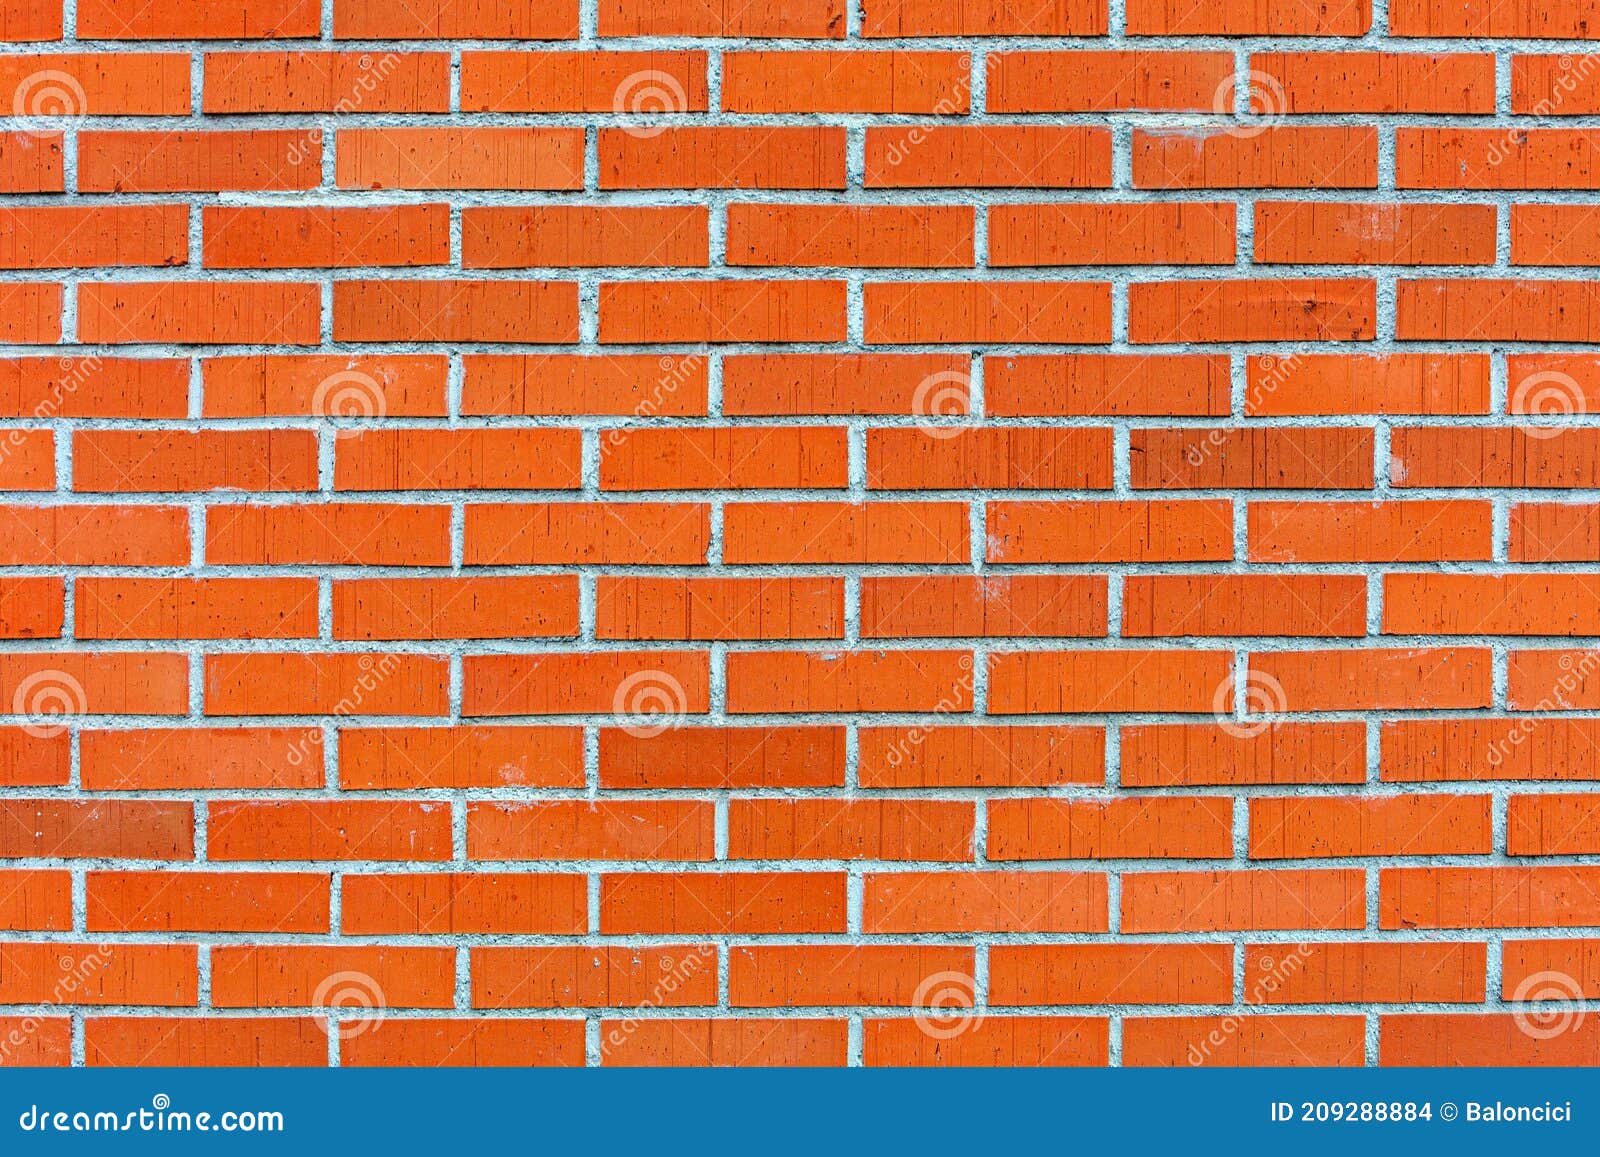 orange bricks wall